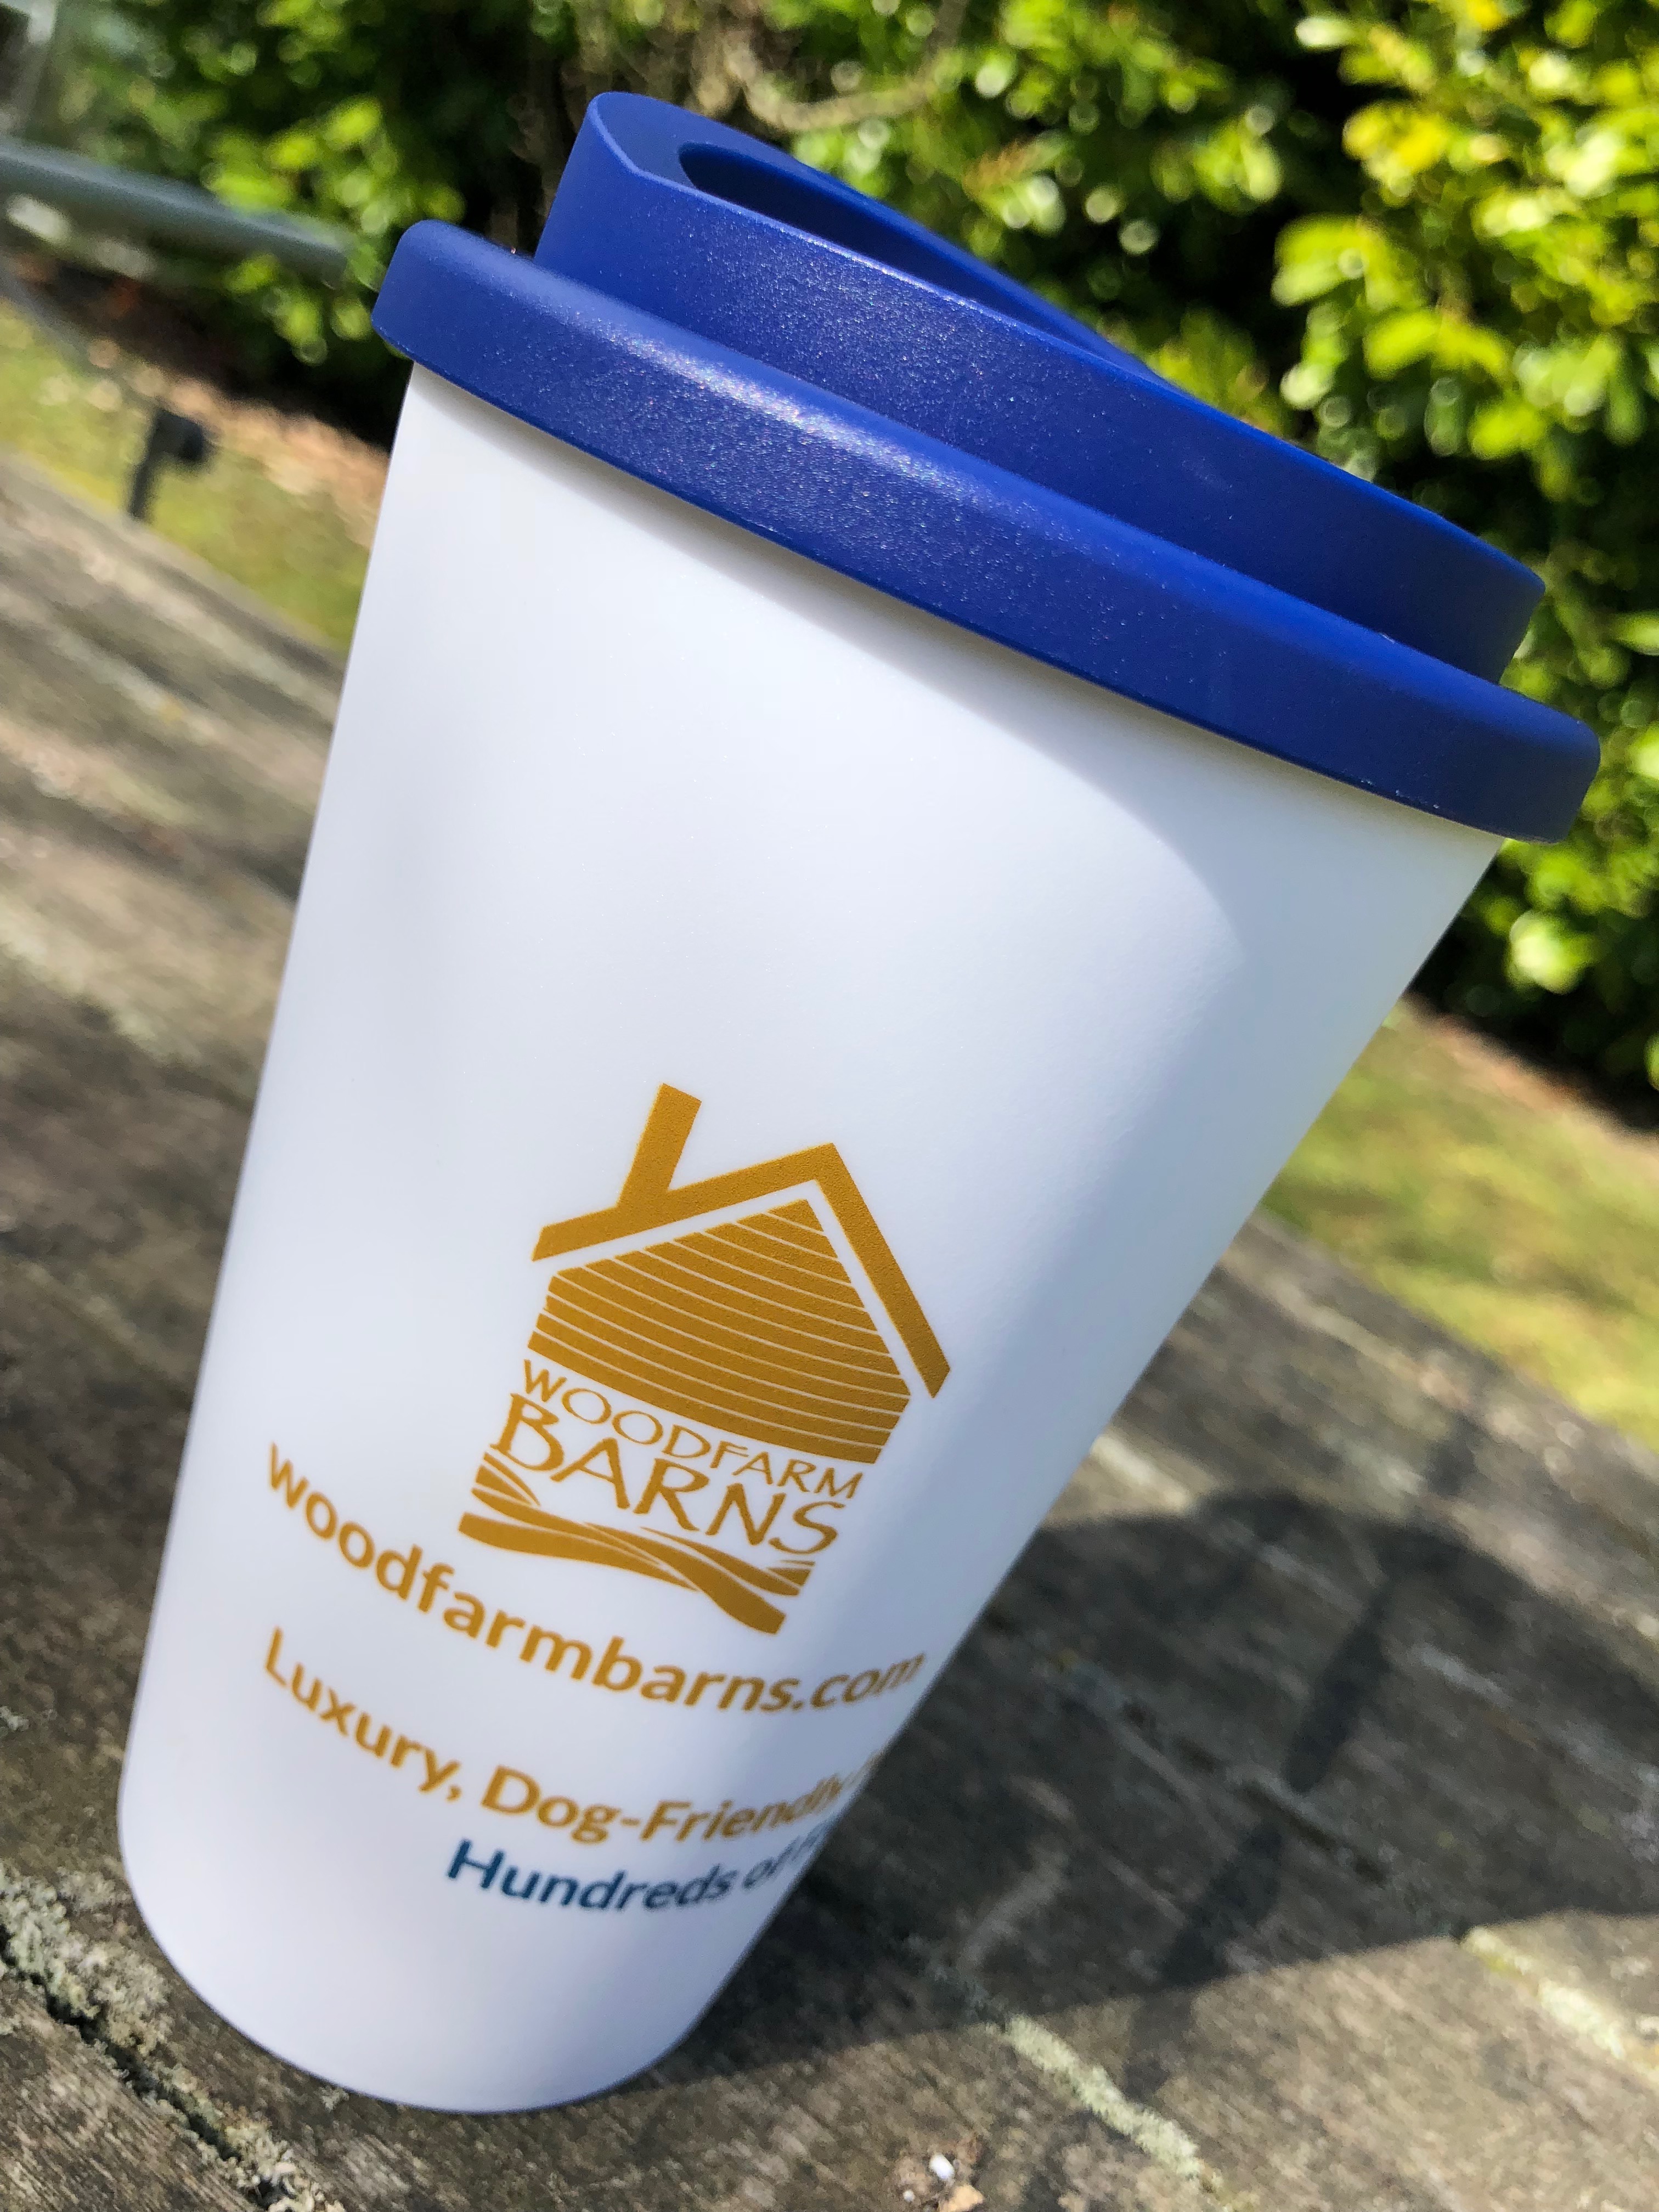 Woodfarm Reusable Coffee Cups are here! - Woodfarm Barns